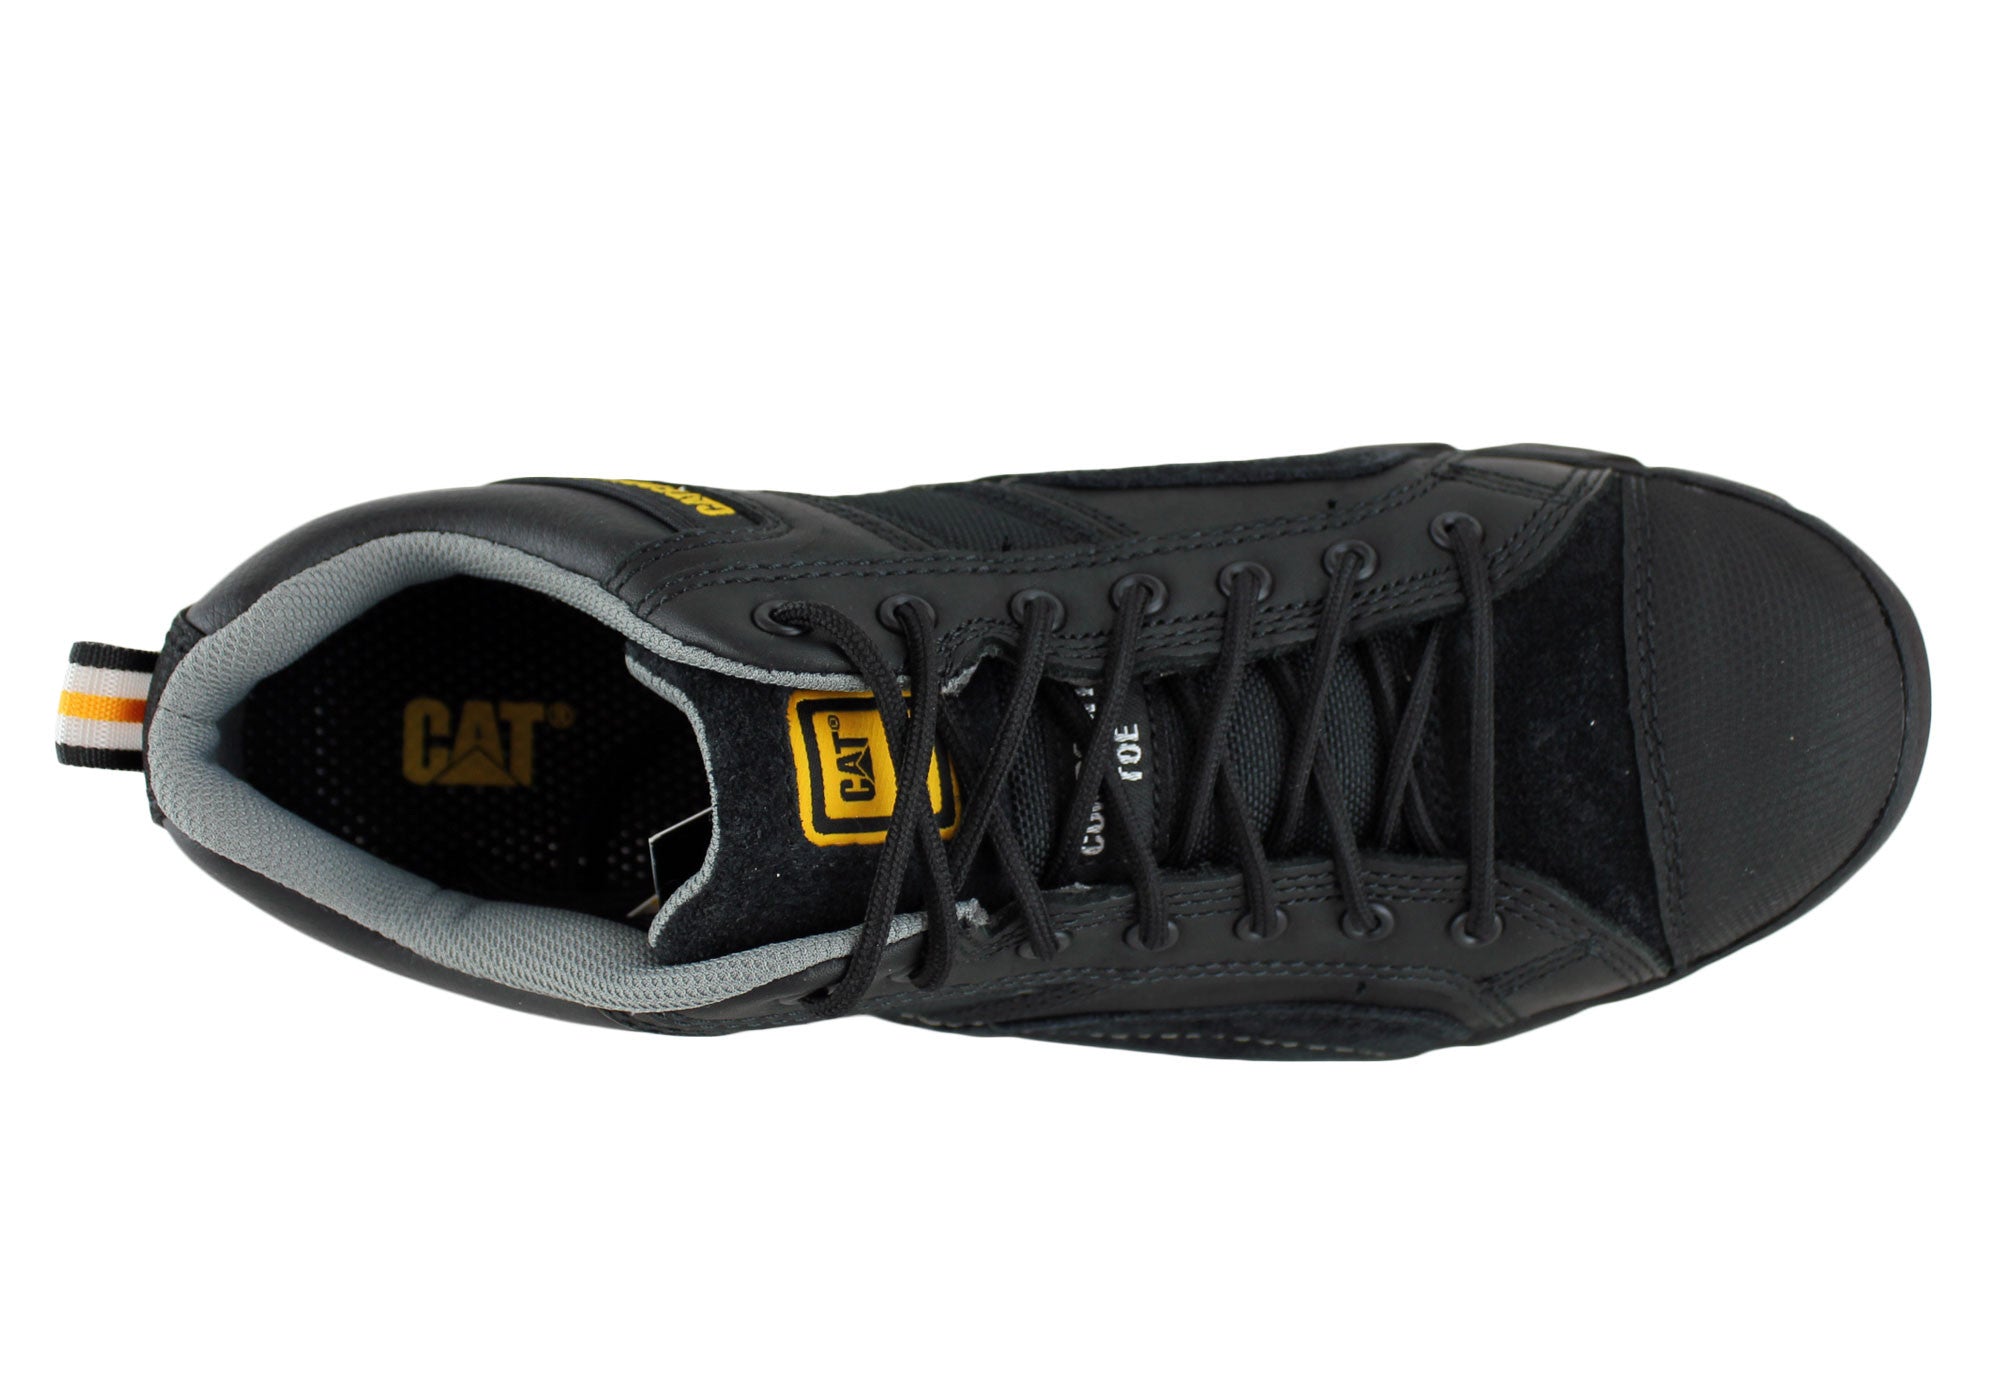 Caterpilar Cat Argon Mens Ct Composite Toe Safety Shoes | Brand House ...